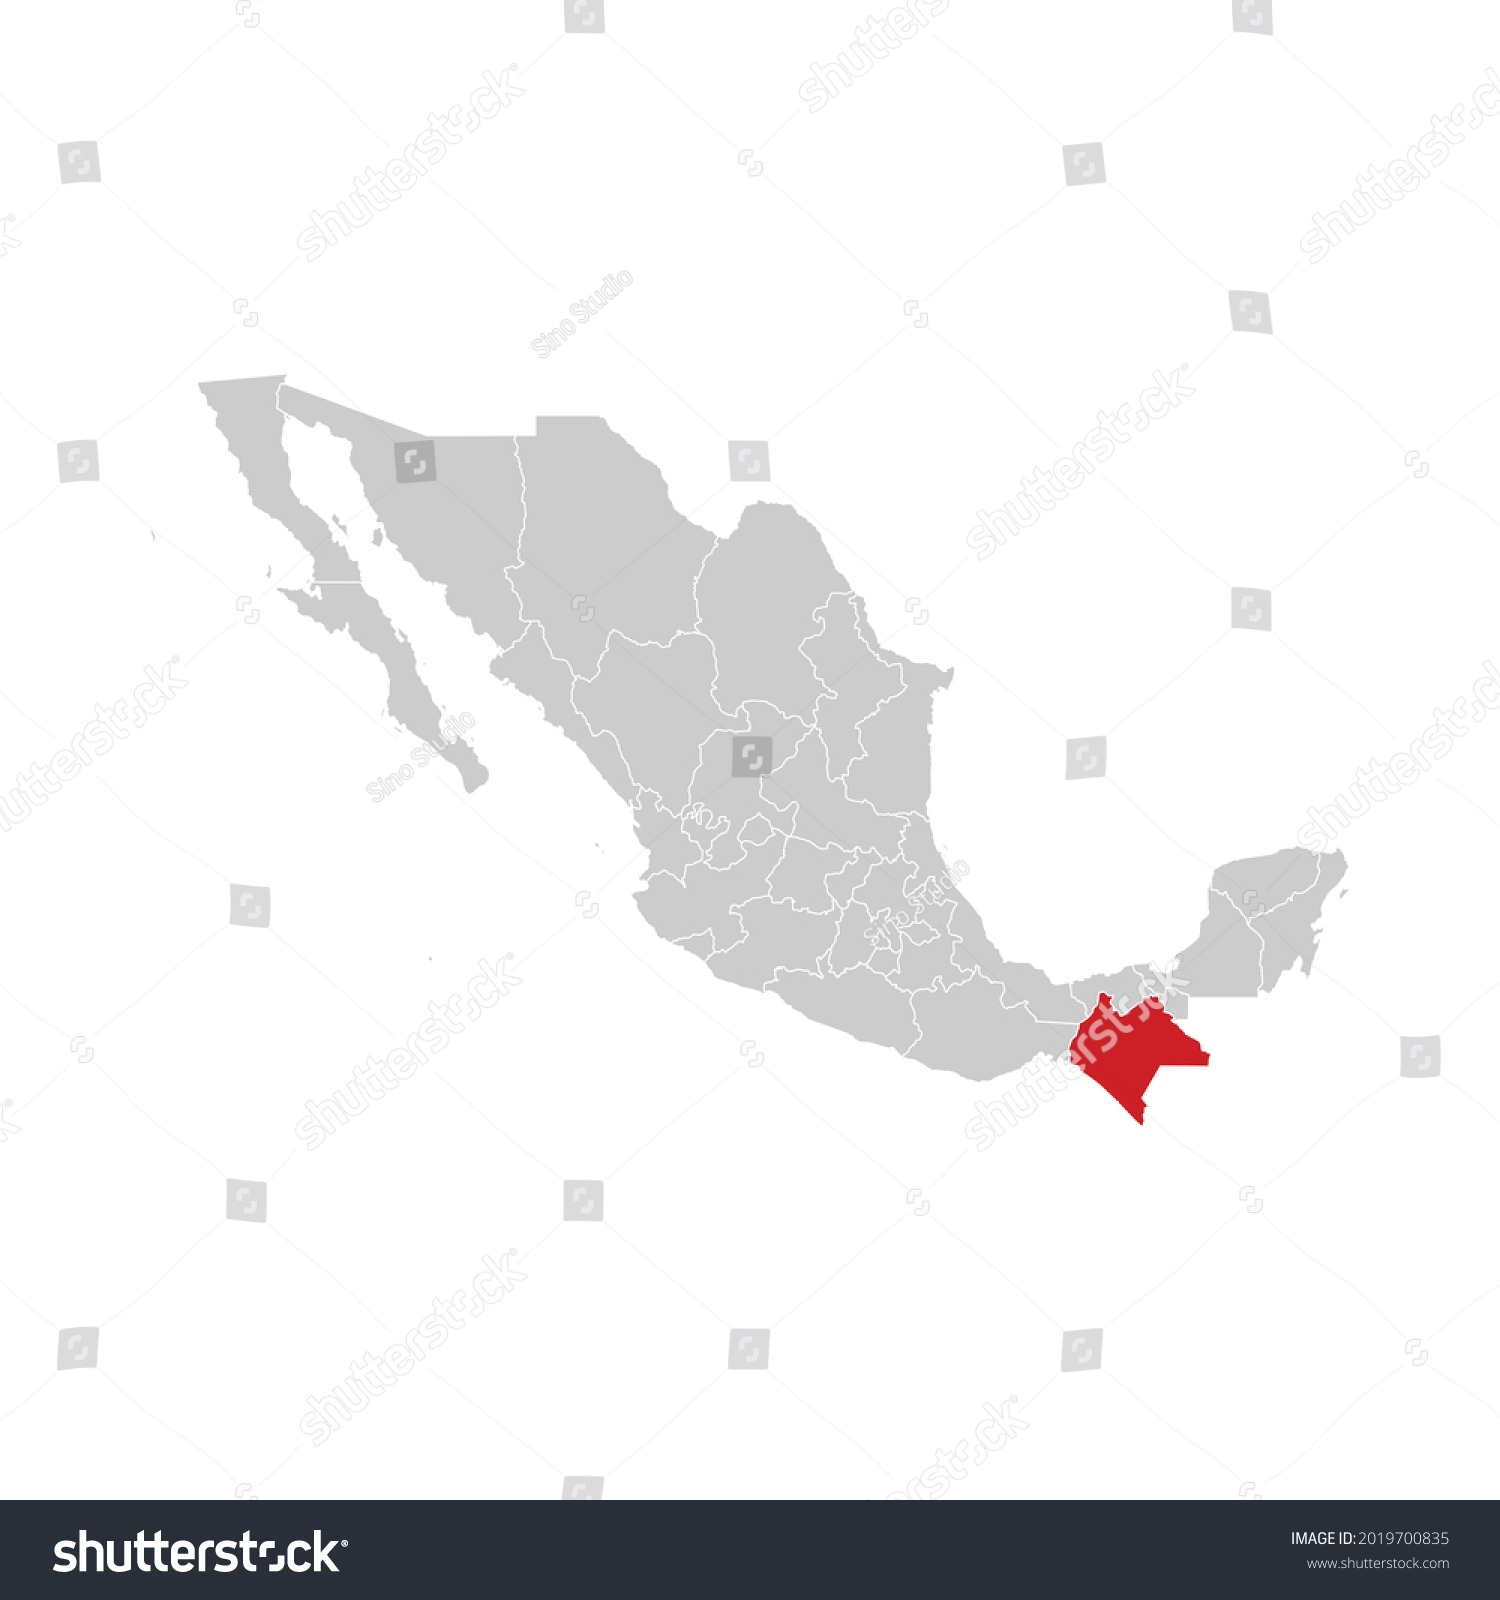 Location Chiapas Mexico Map Vector Stock Vector Royalty Free 2019700835 Shutterstock 4574